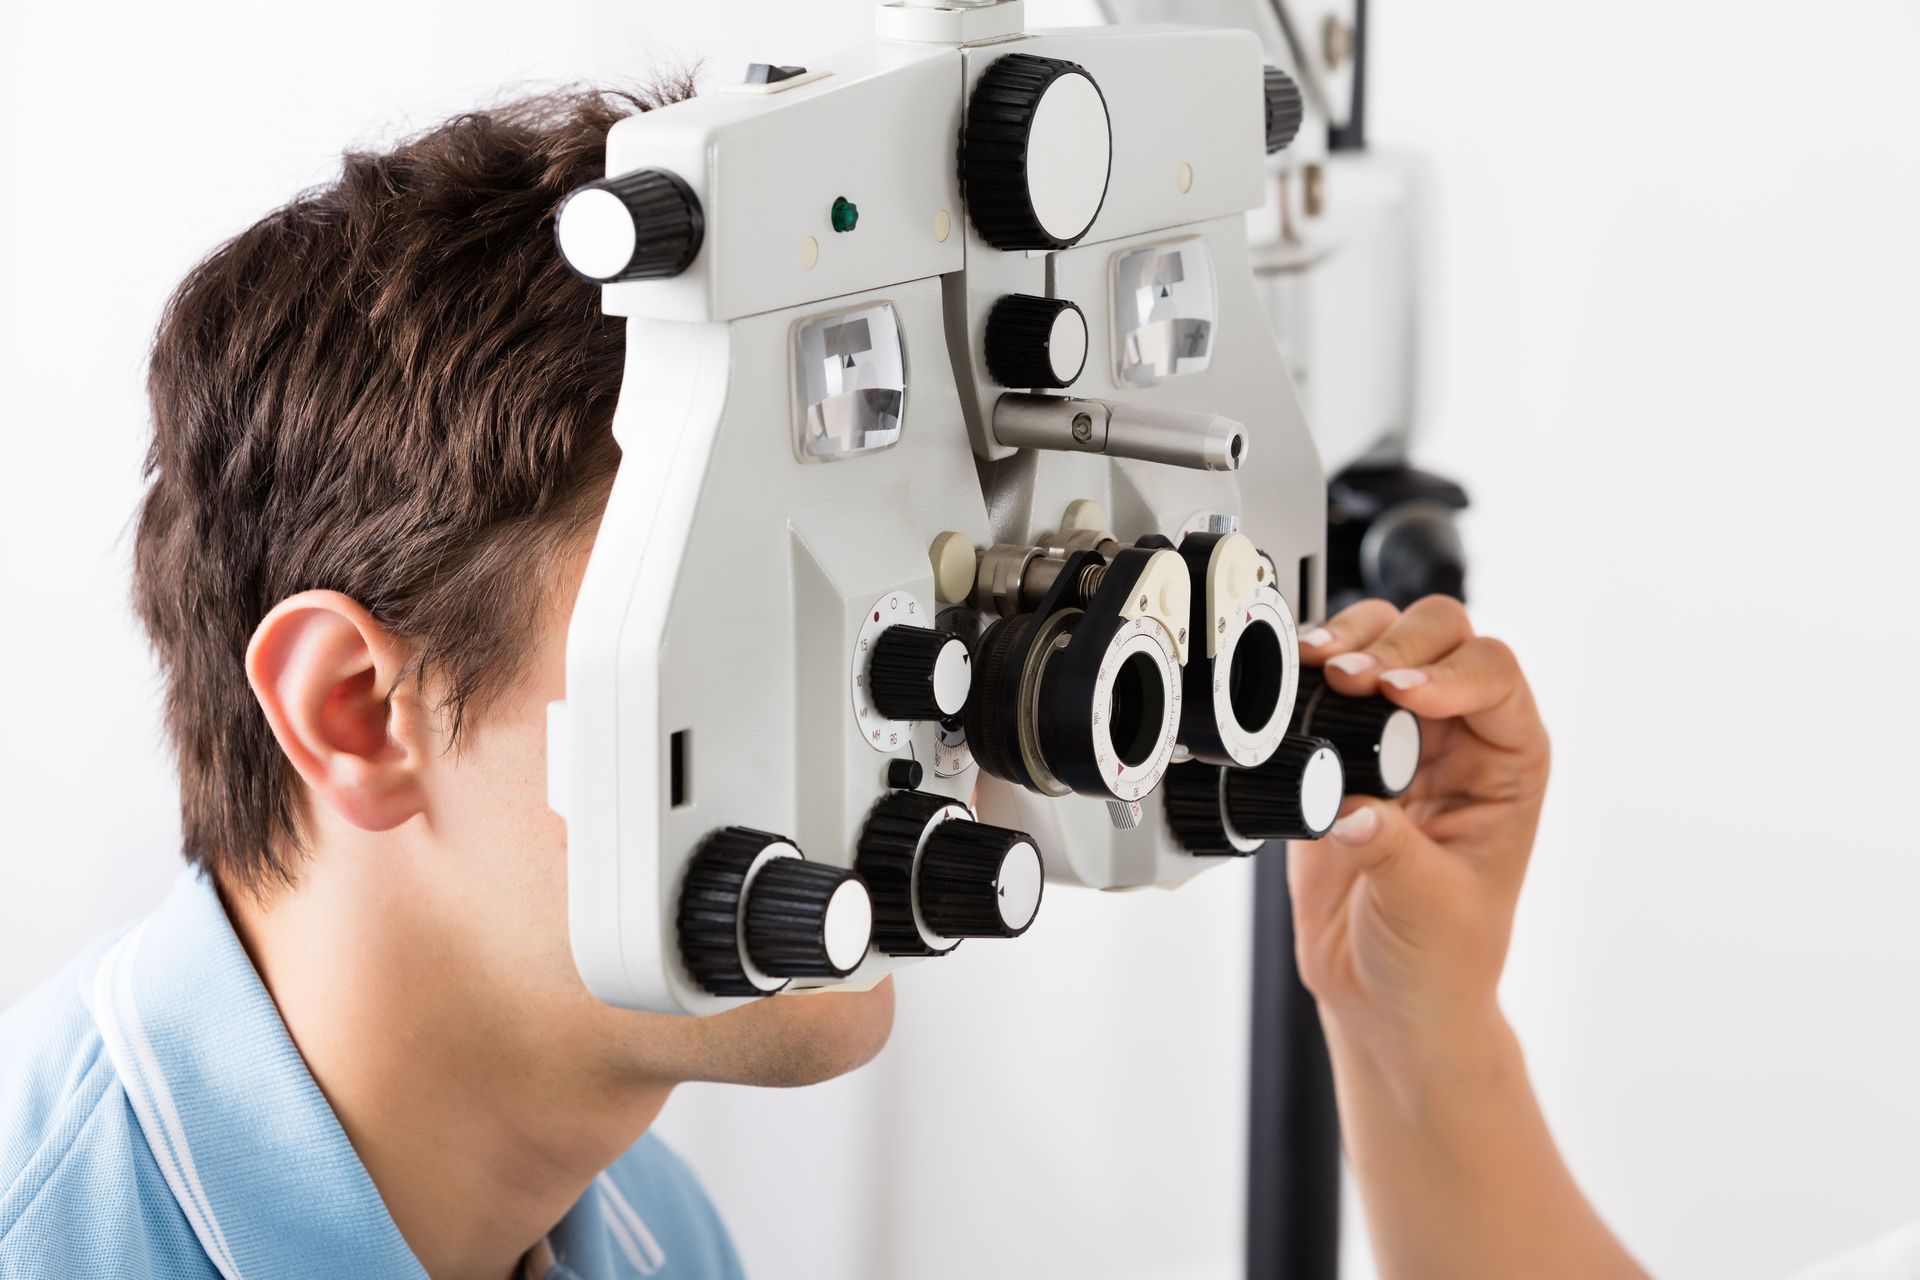 optometrist